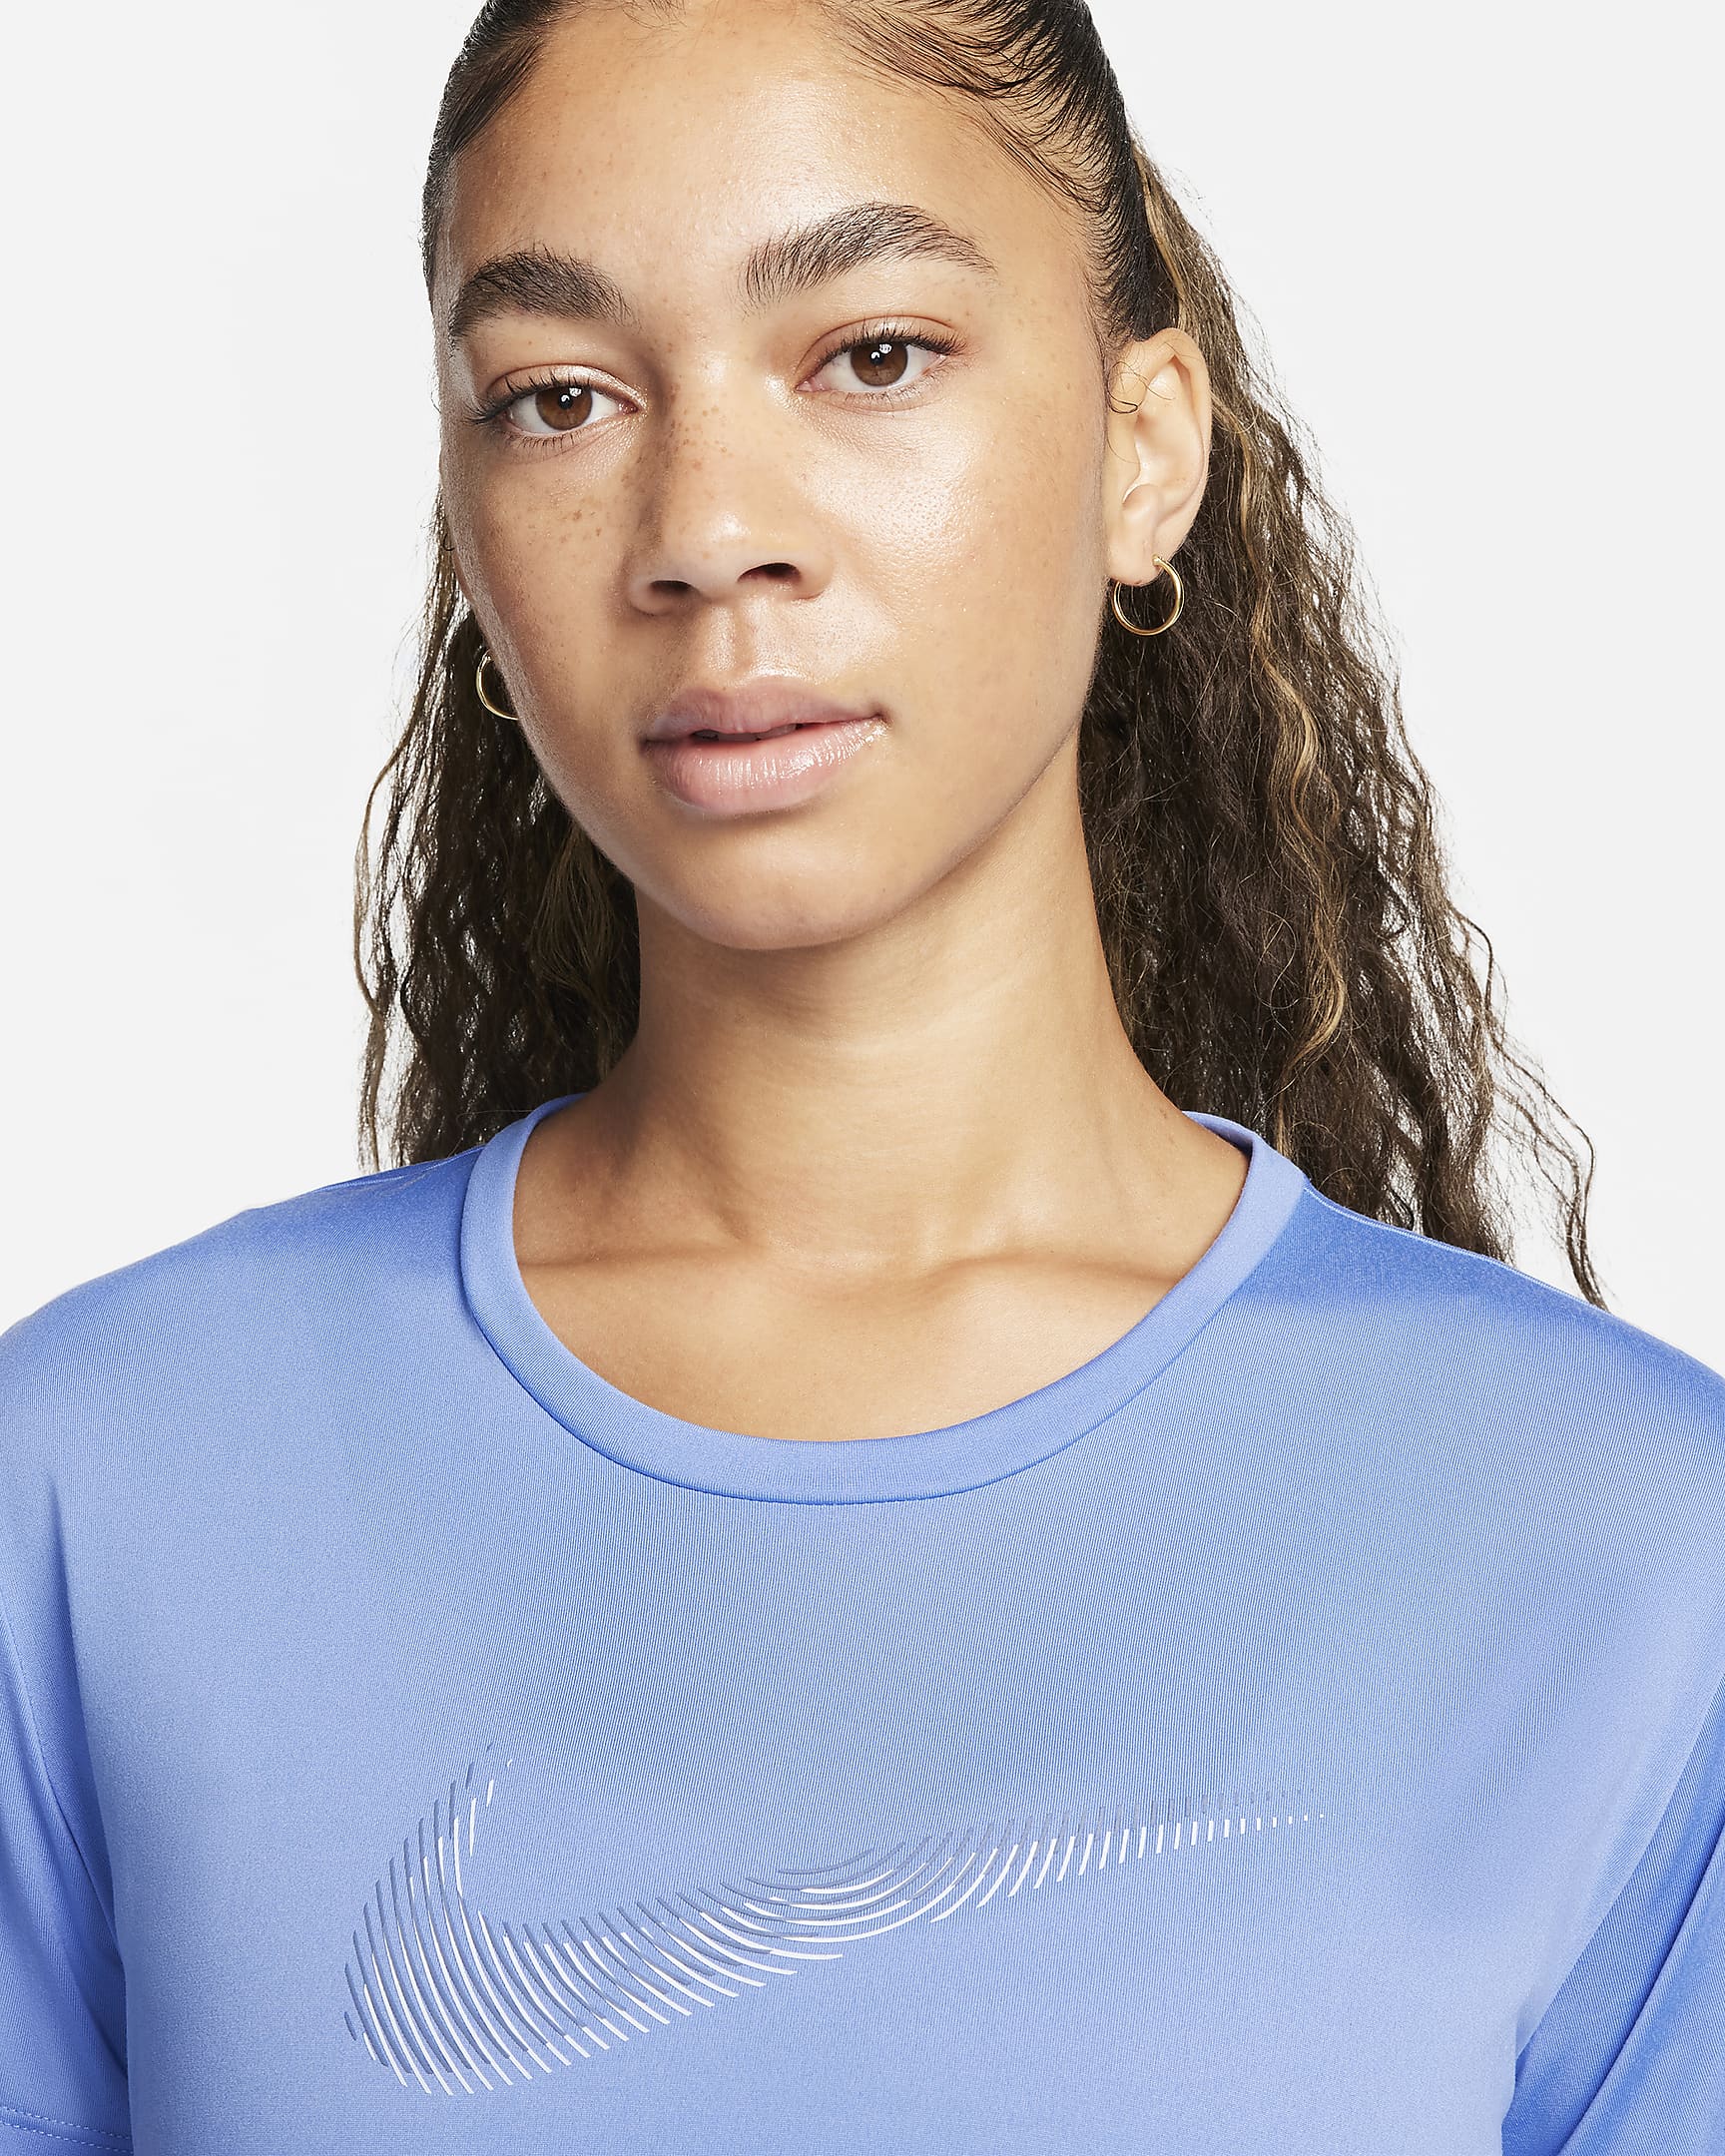 Nike Dri-FIT Swoosh Women's Short-Sleeve Running Top. Nike UK